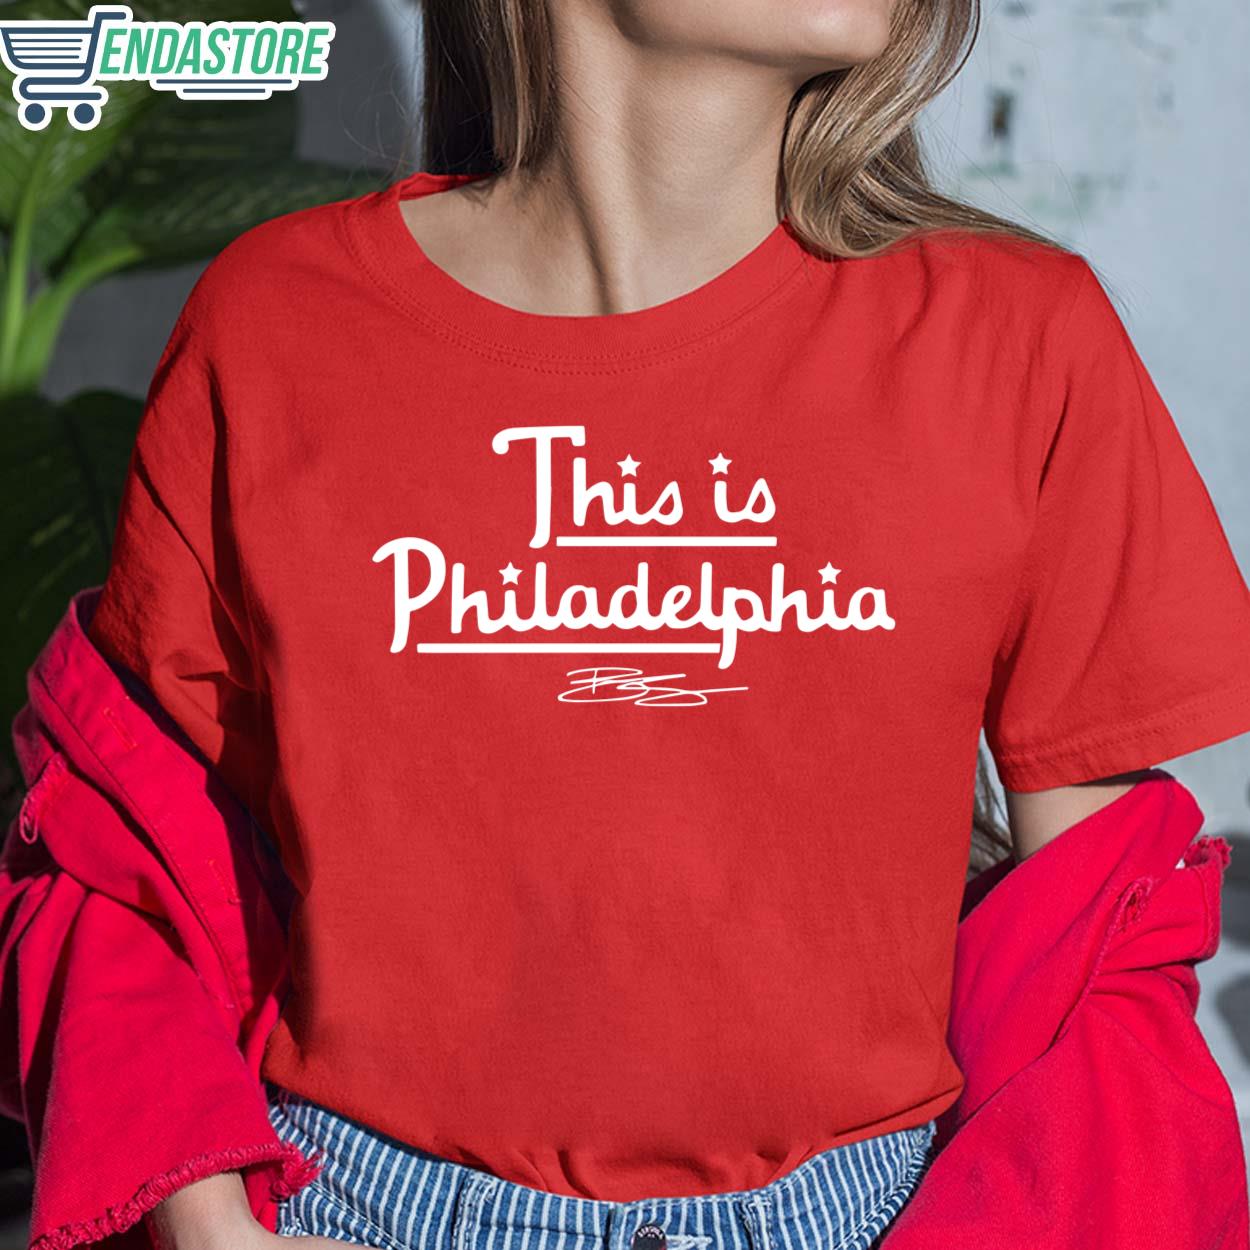 Philadelphia Phillies Bryson Stott Great Stott shirt, hoodie